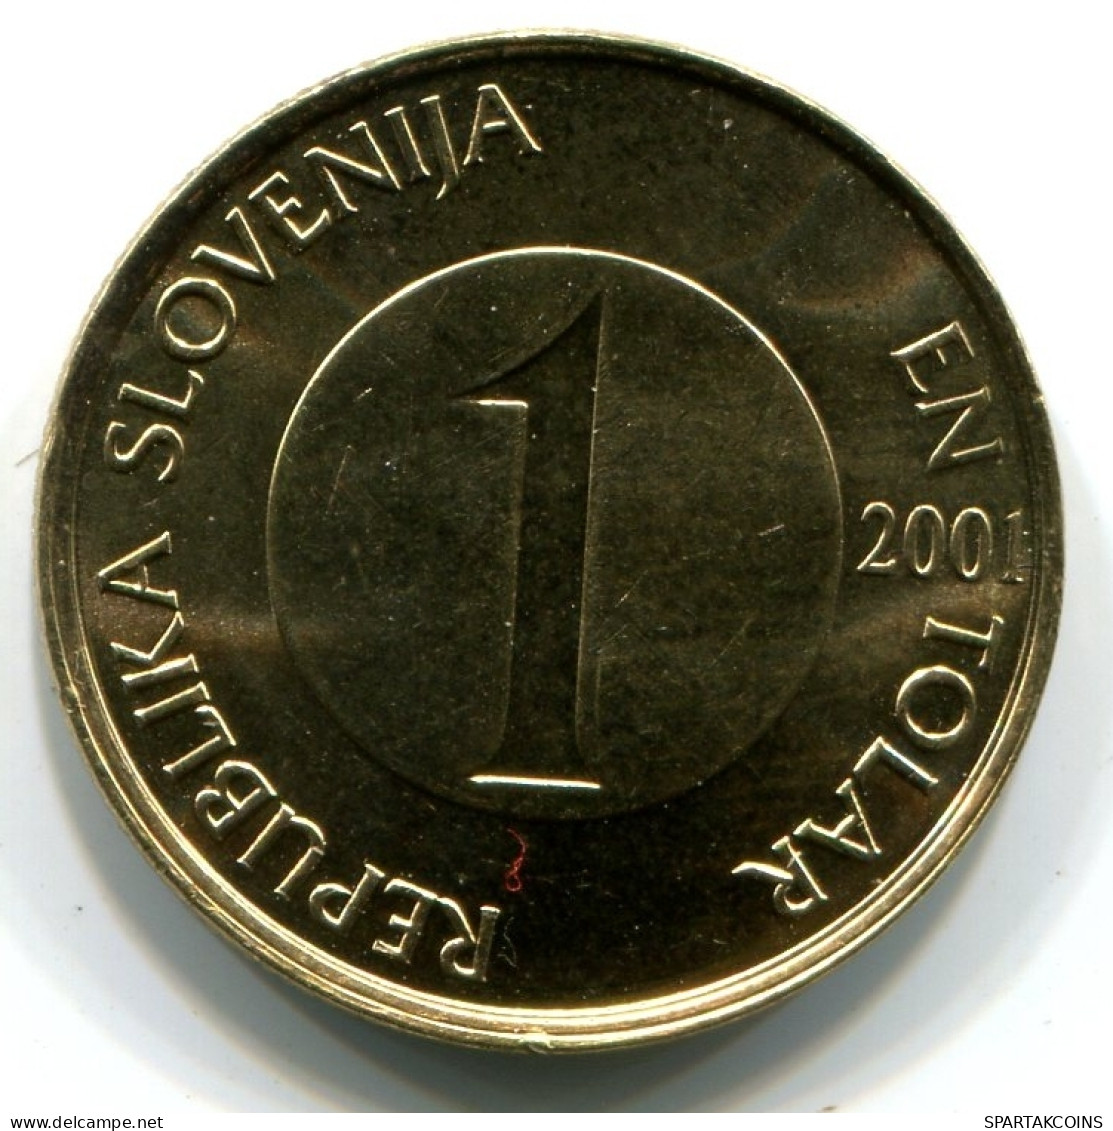 1 TOLAR 2001 SLOVENIA UNC Fish Coin #W11370.U - Slowenien